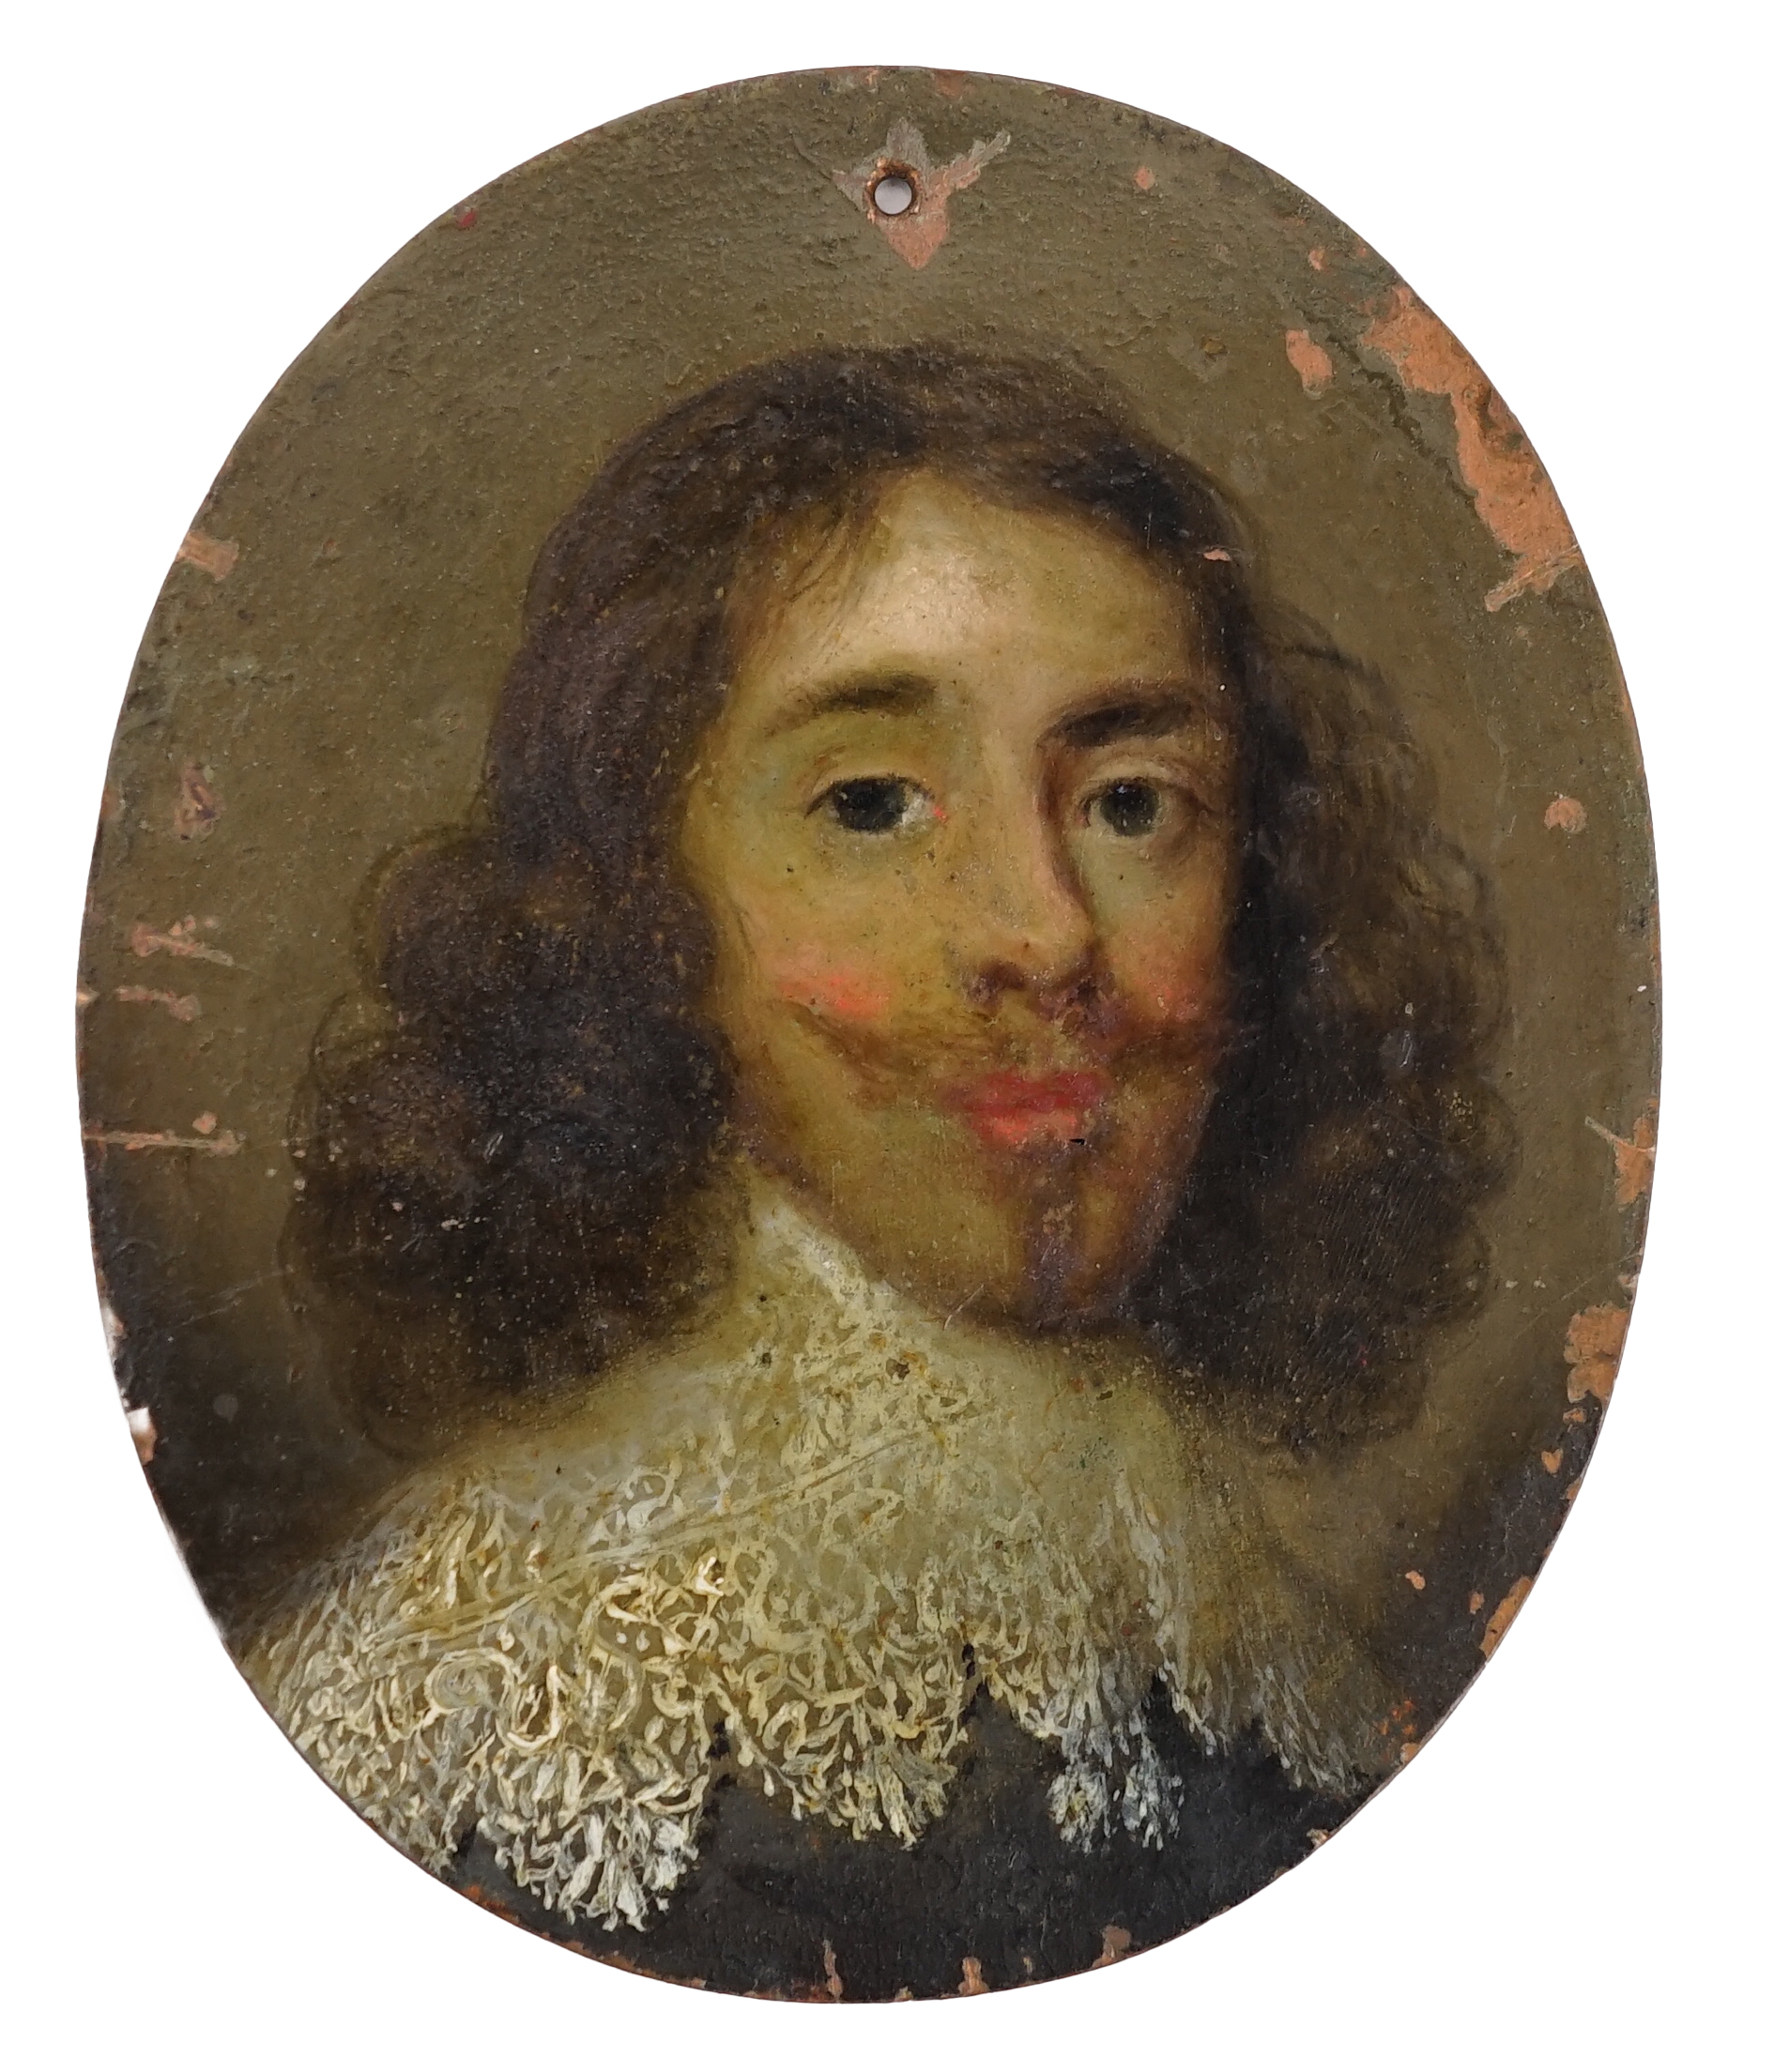 English School circa 1650, Portrait miniature of a nobleman, oil on copper, 5 x 4cm.